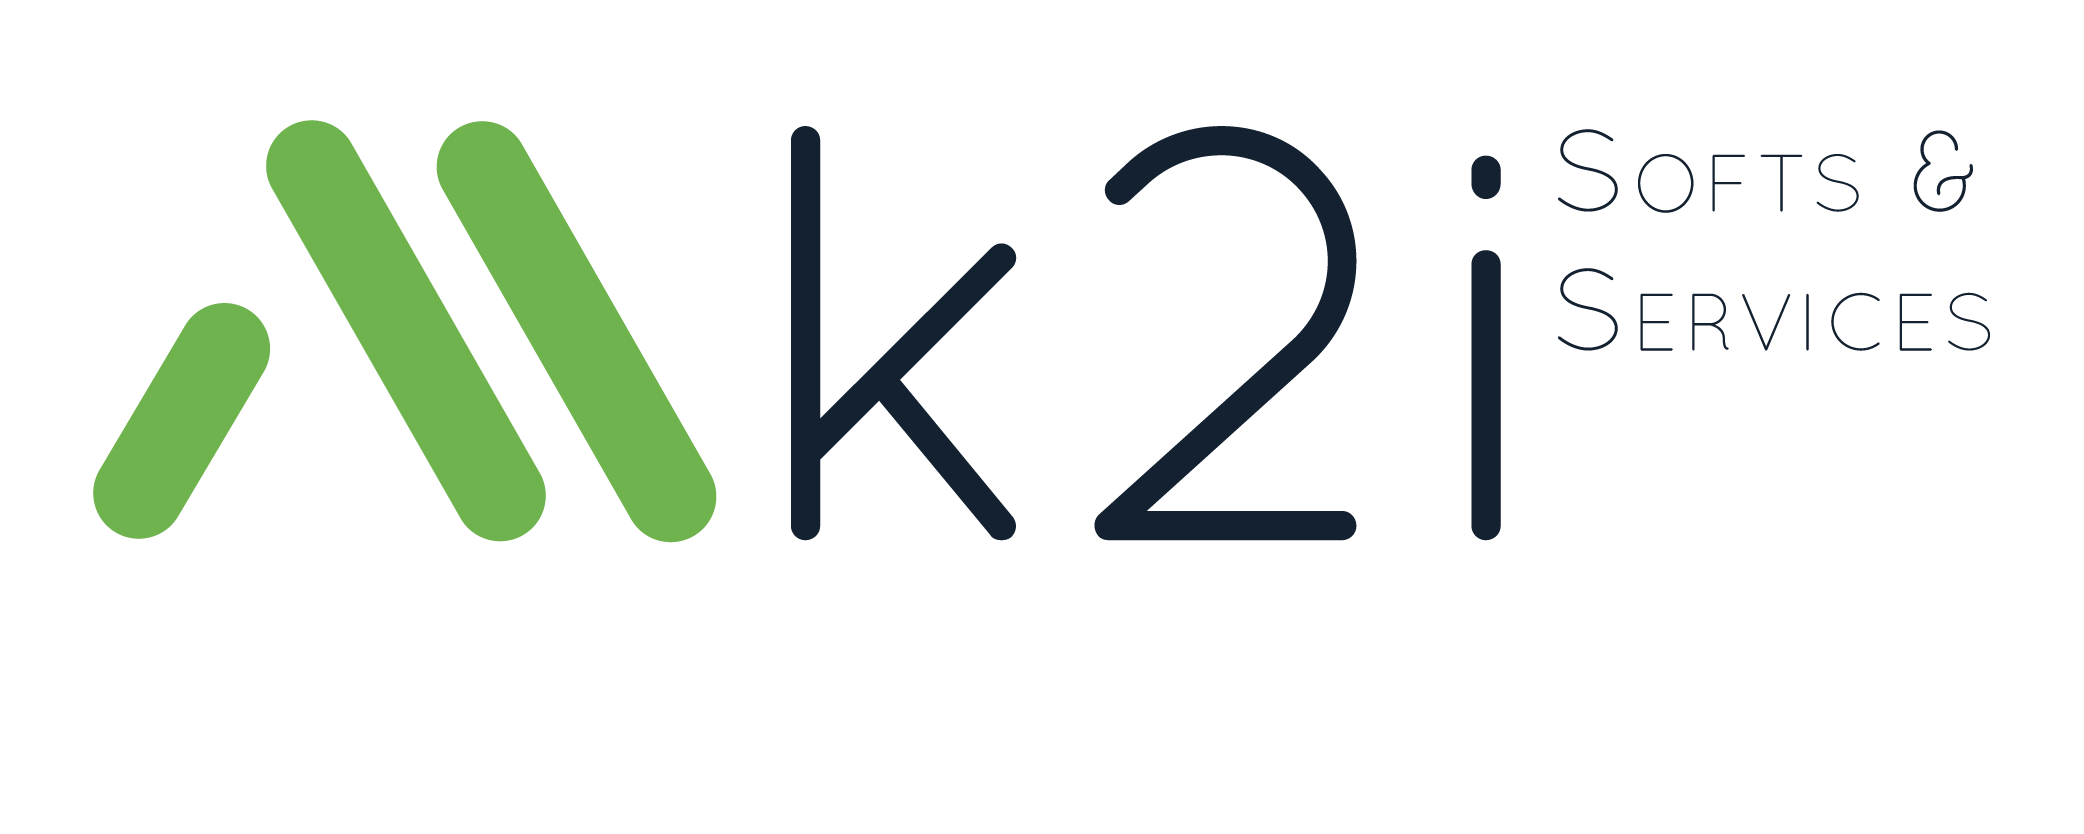 MK2i